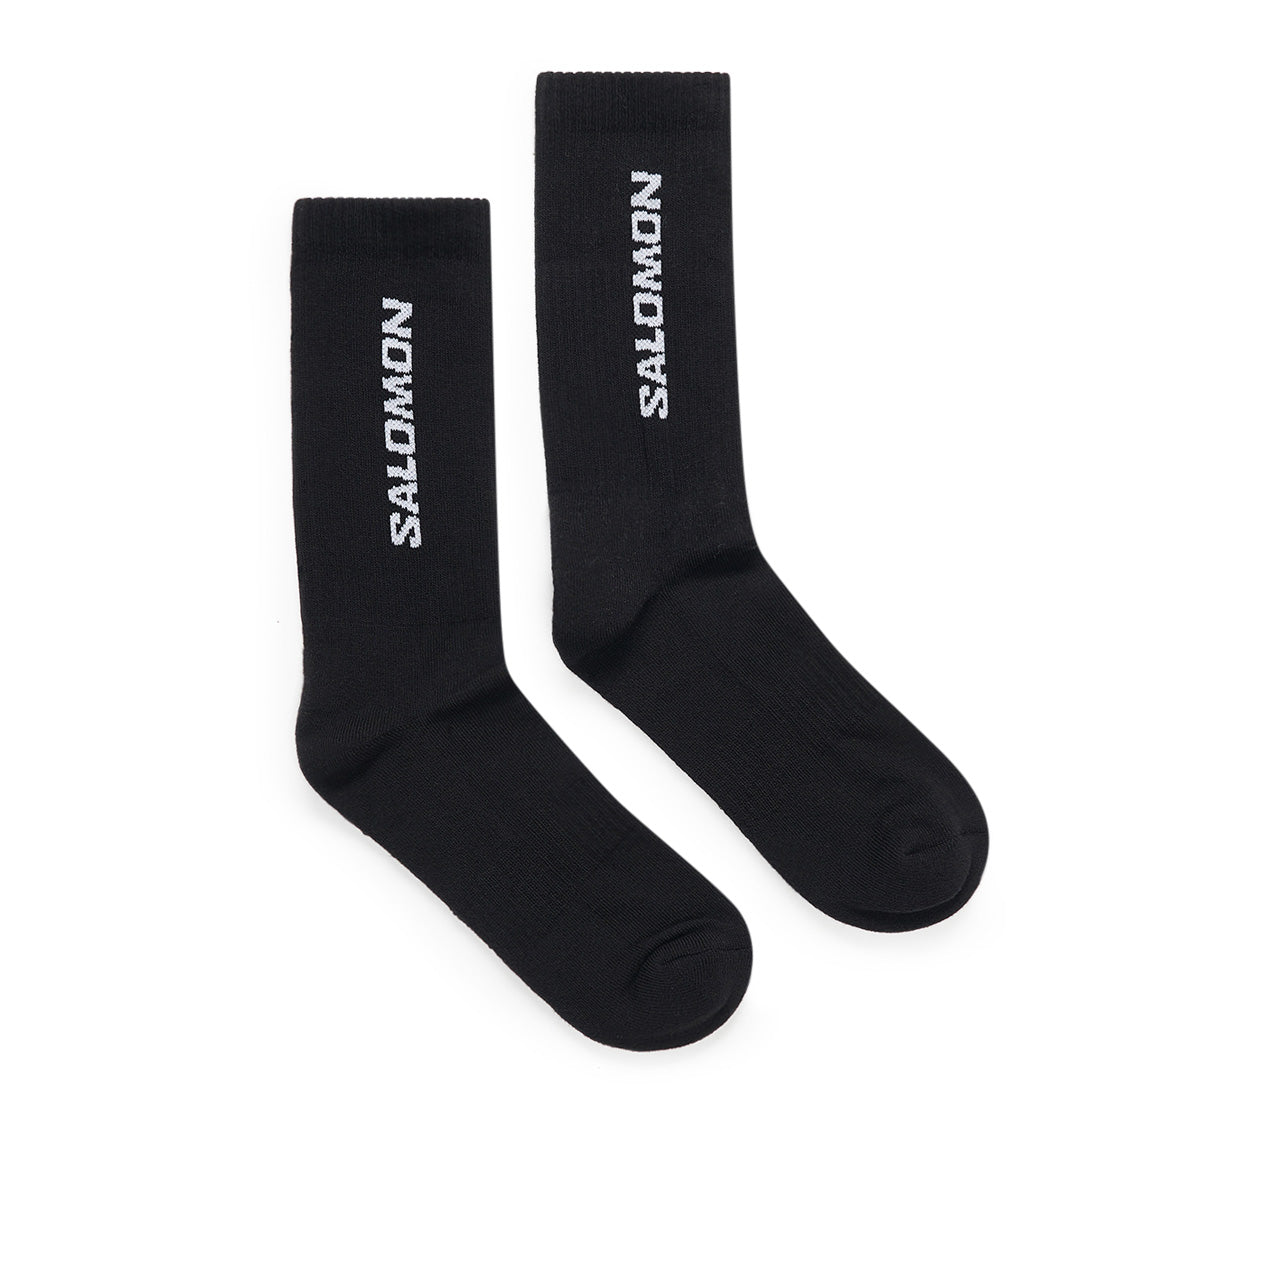 socks (black) 3-pack salomon a.plus everyday crew store - LC2086100